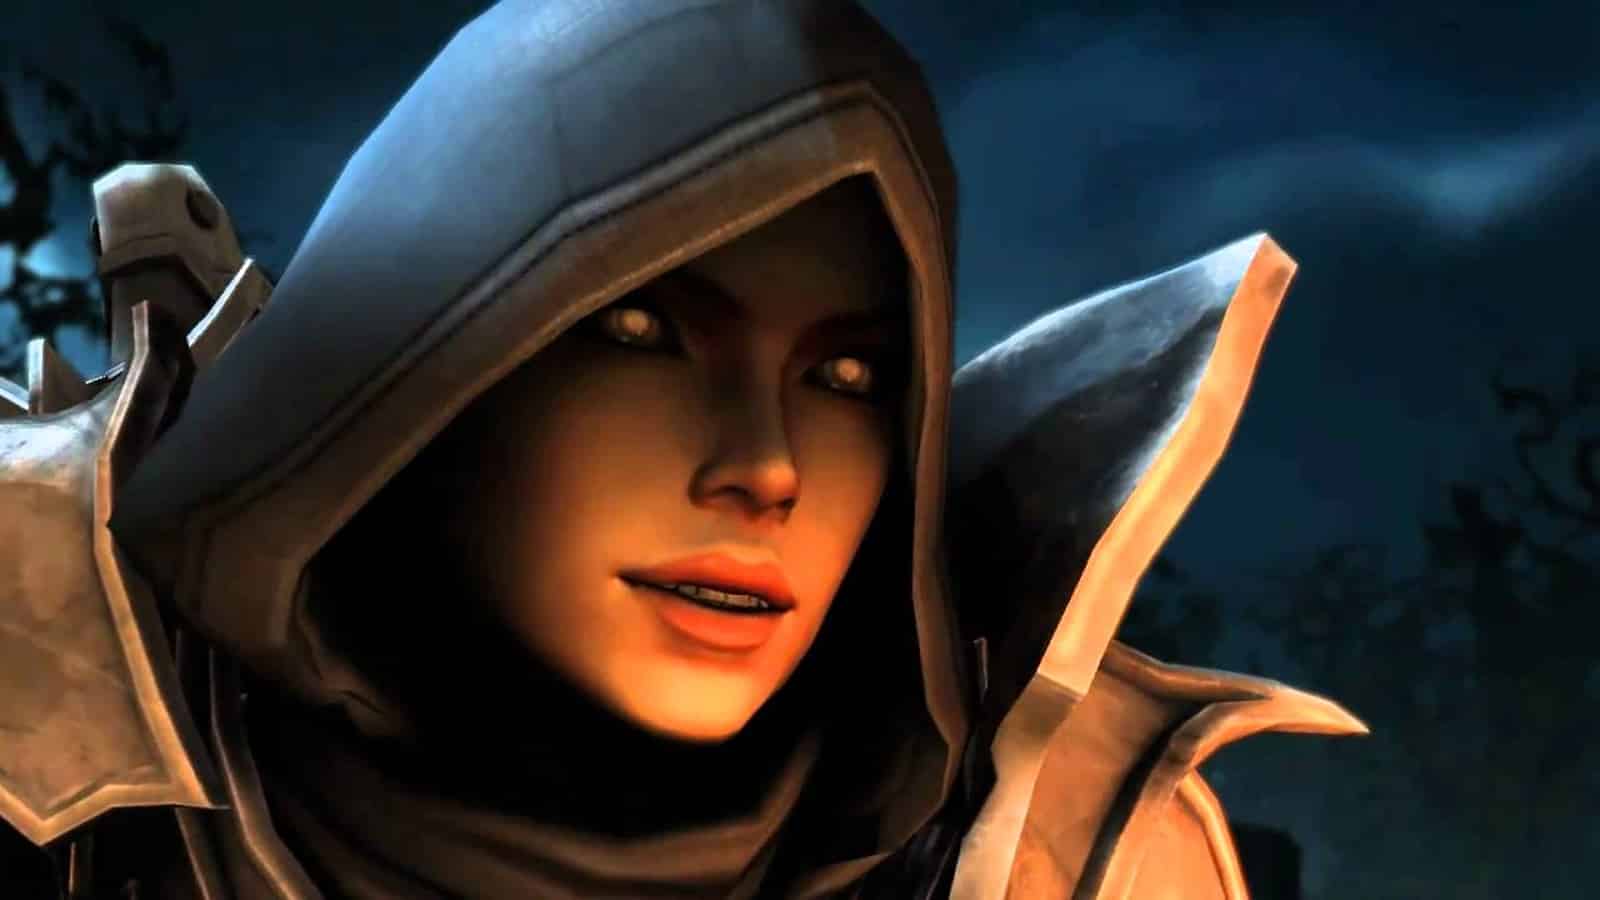 An image of Diablo 3's female Demon Hunter, Valla